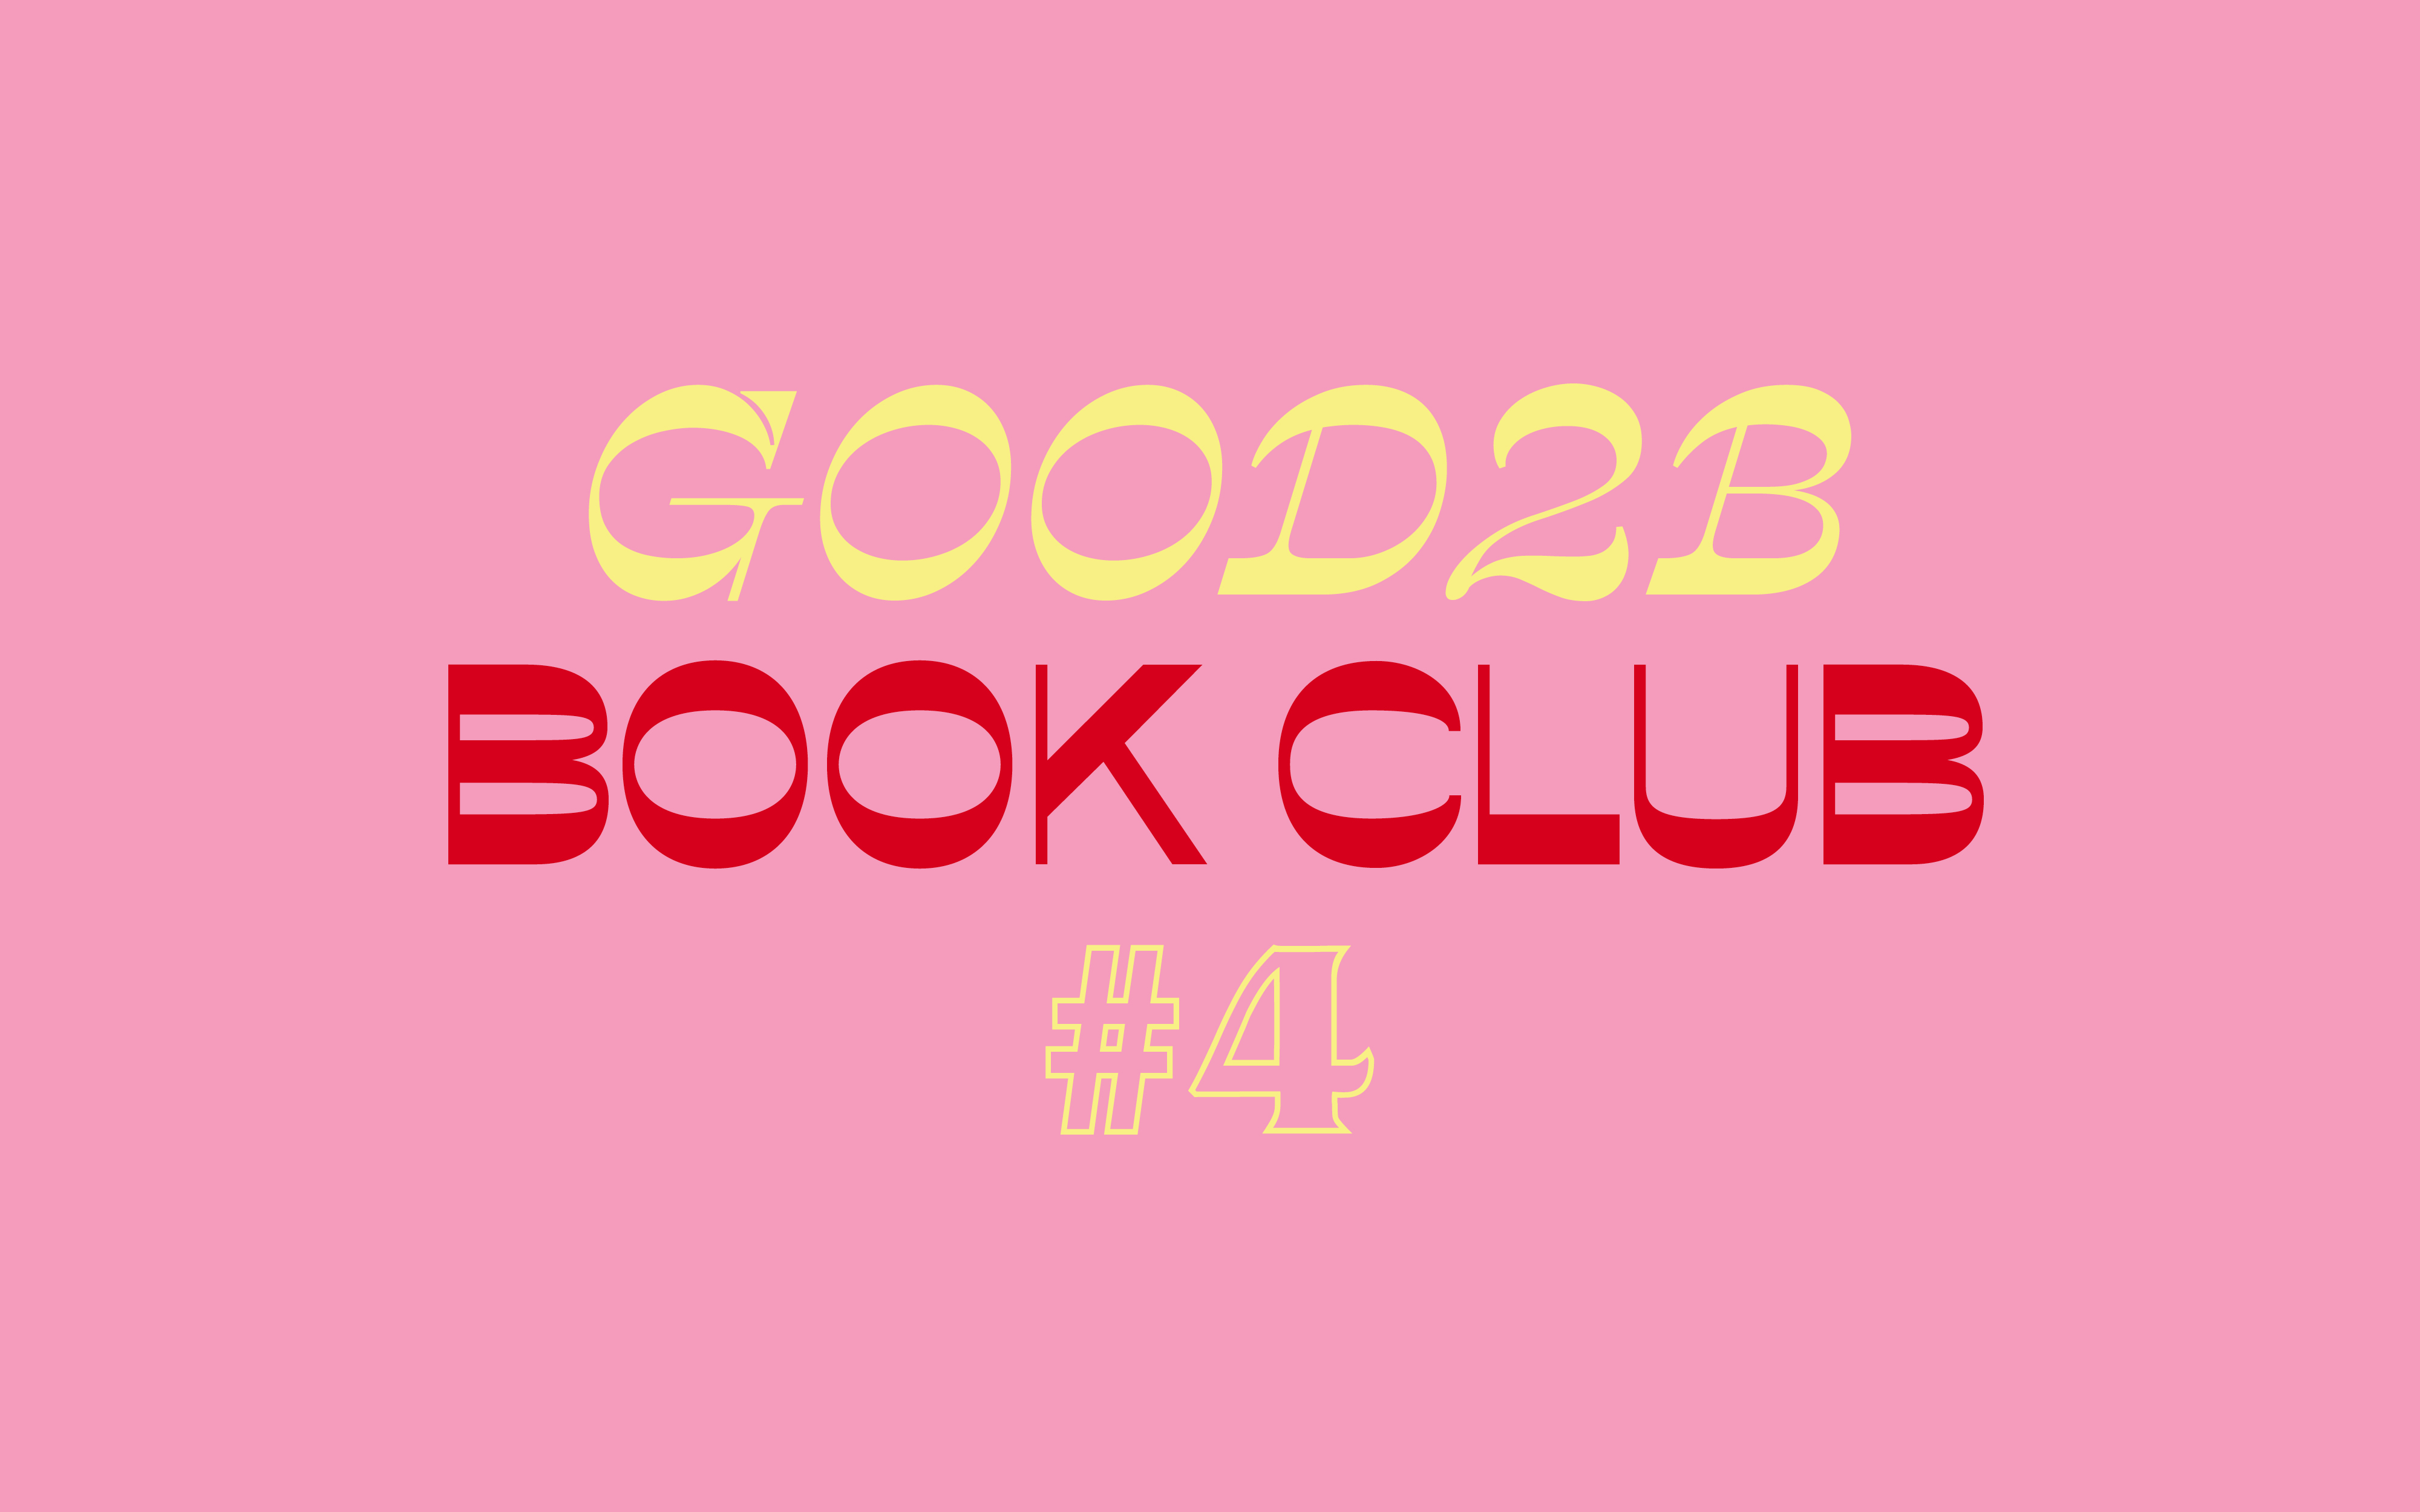 Good2b Book Club #4: ‘Mujeres’, de Charles Bukowski